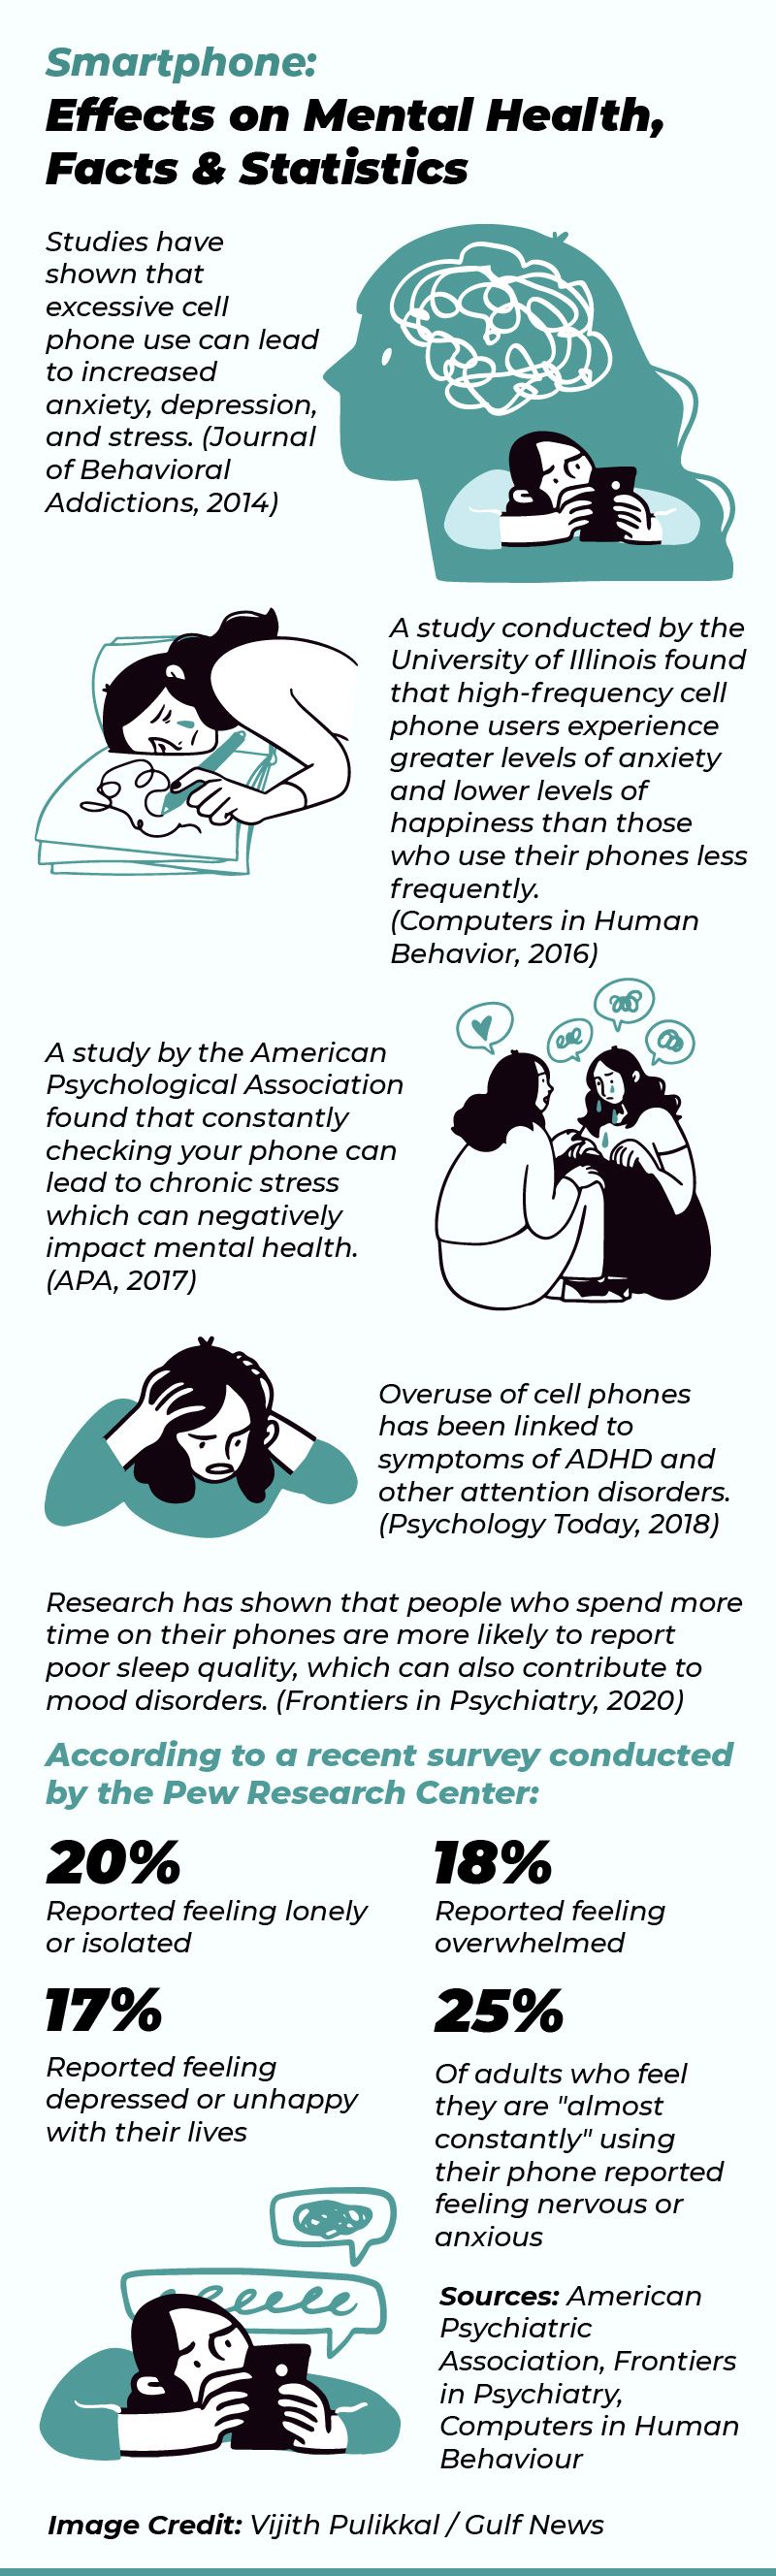 Smartphone addiction